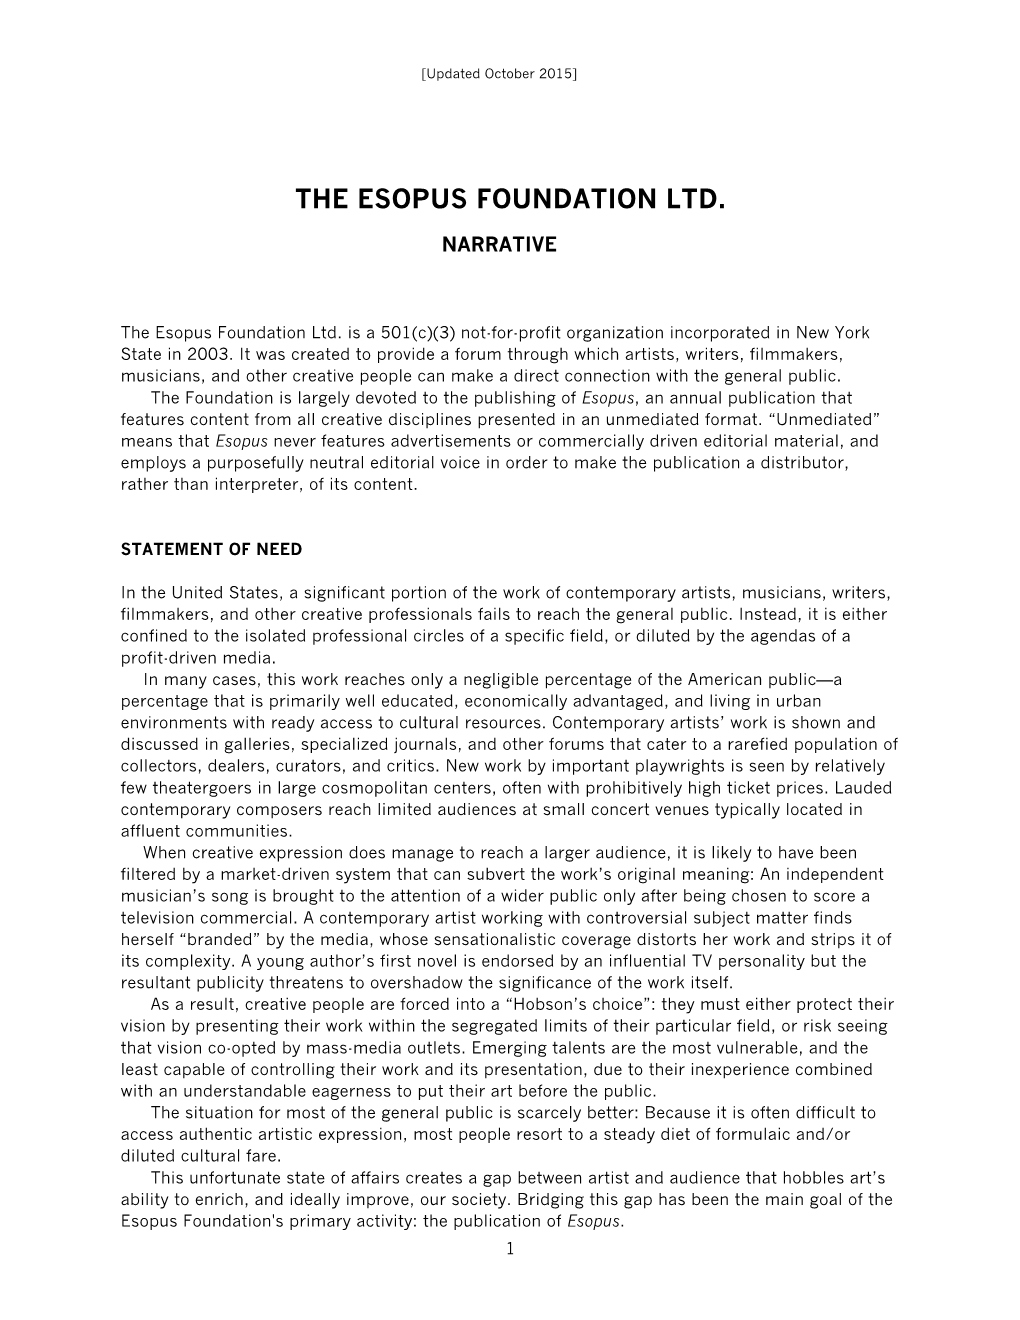 The Esopus Foundation Ltd